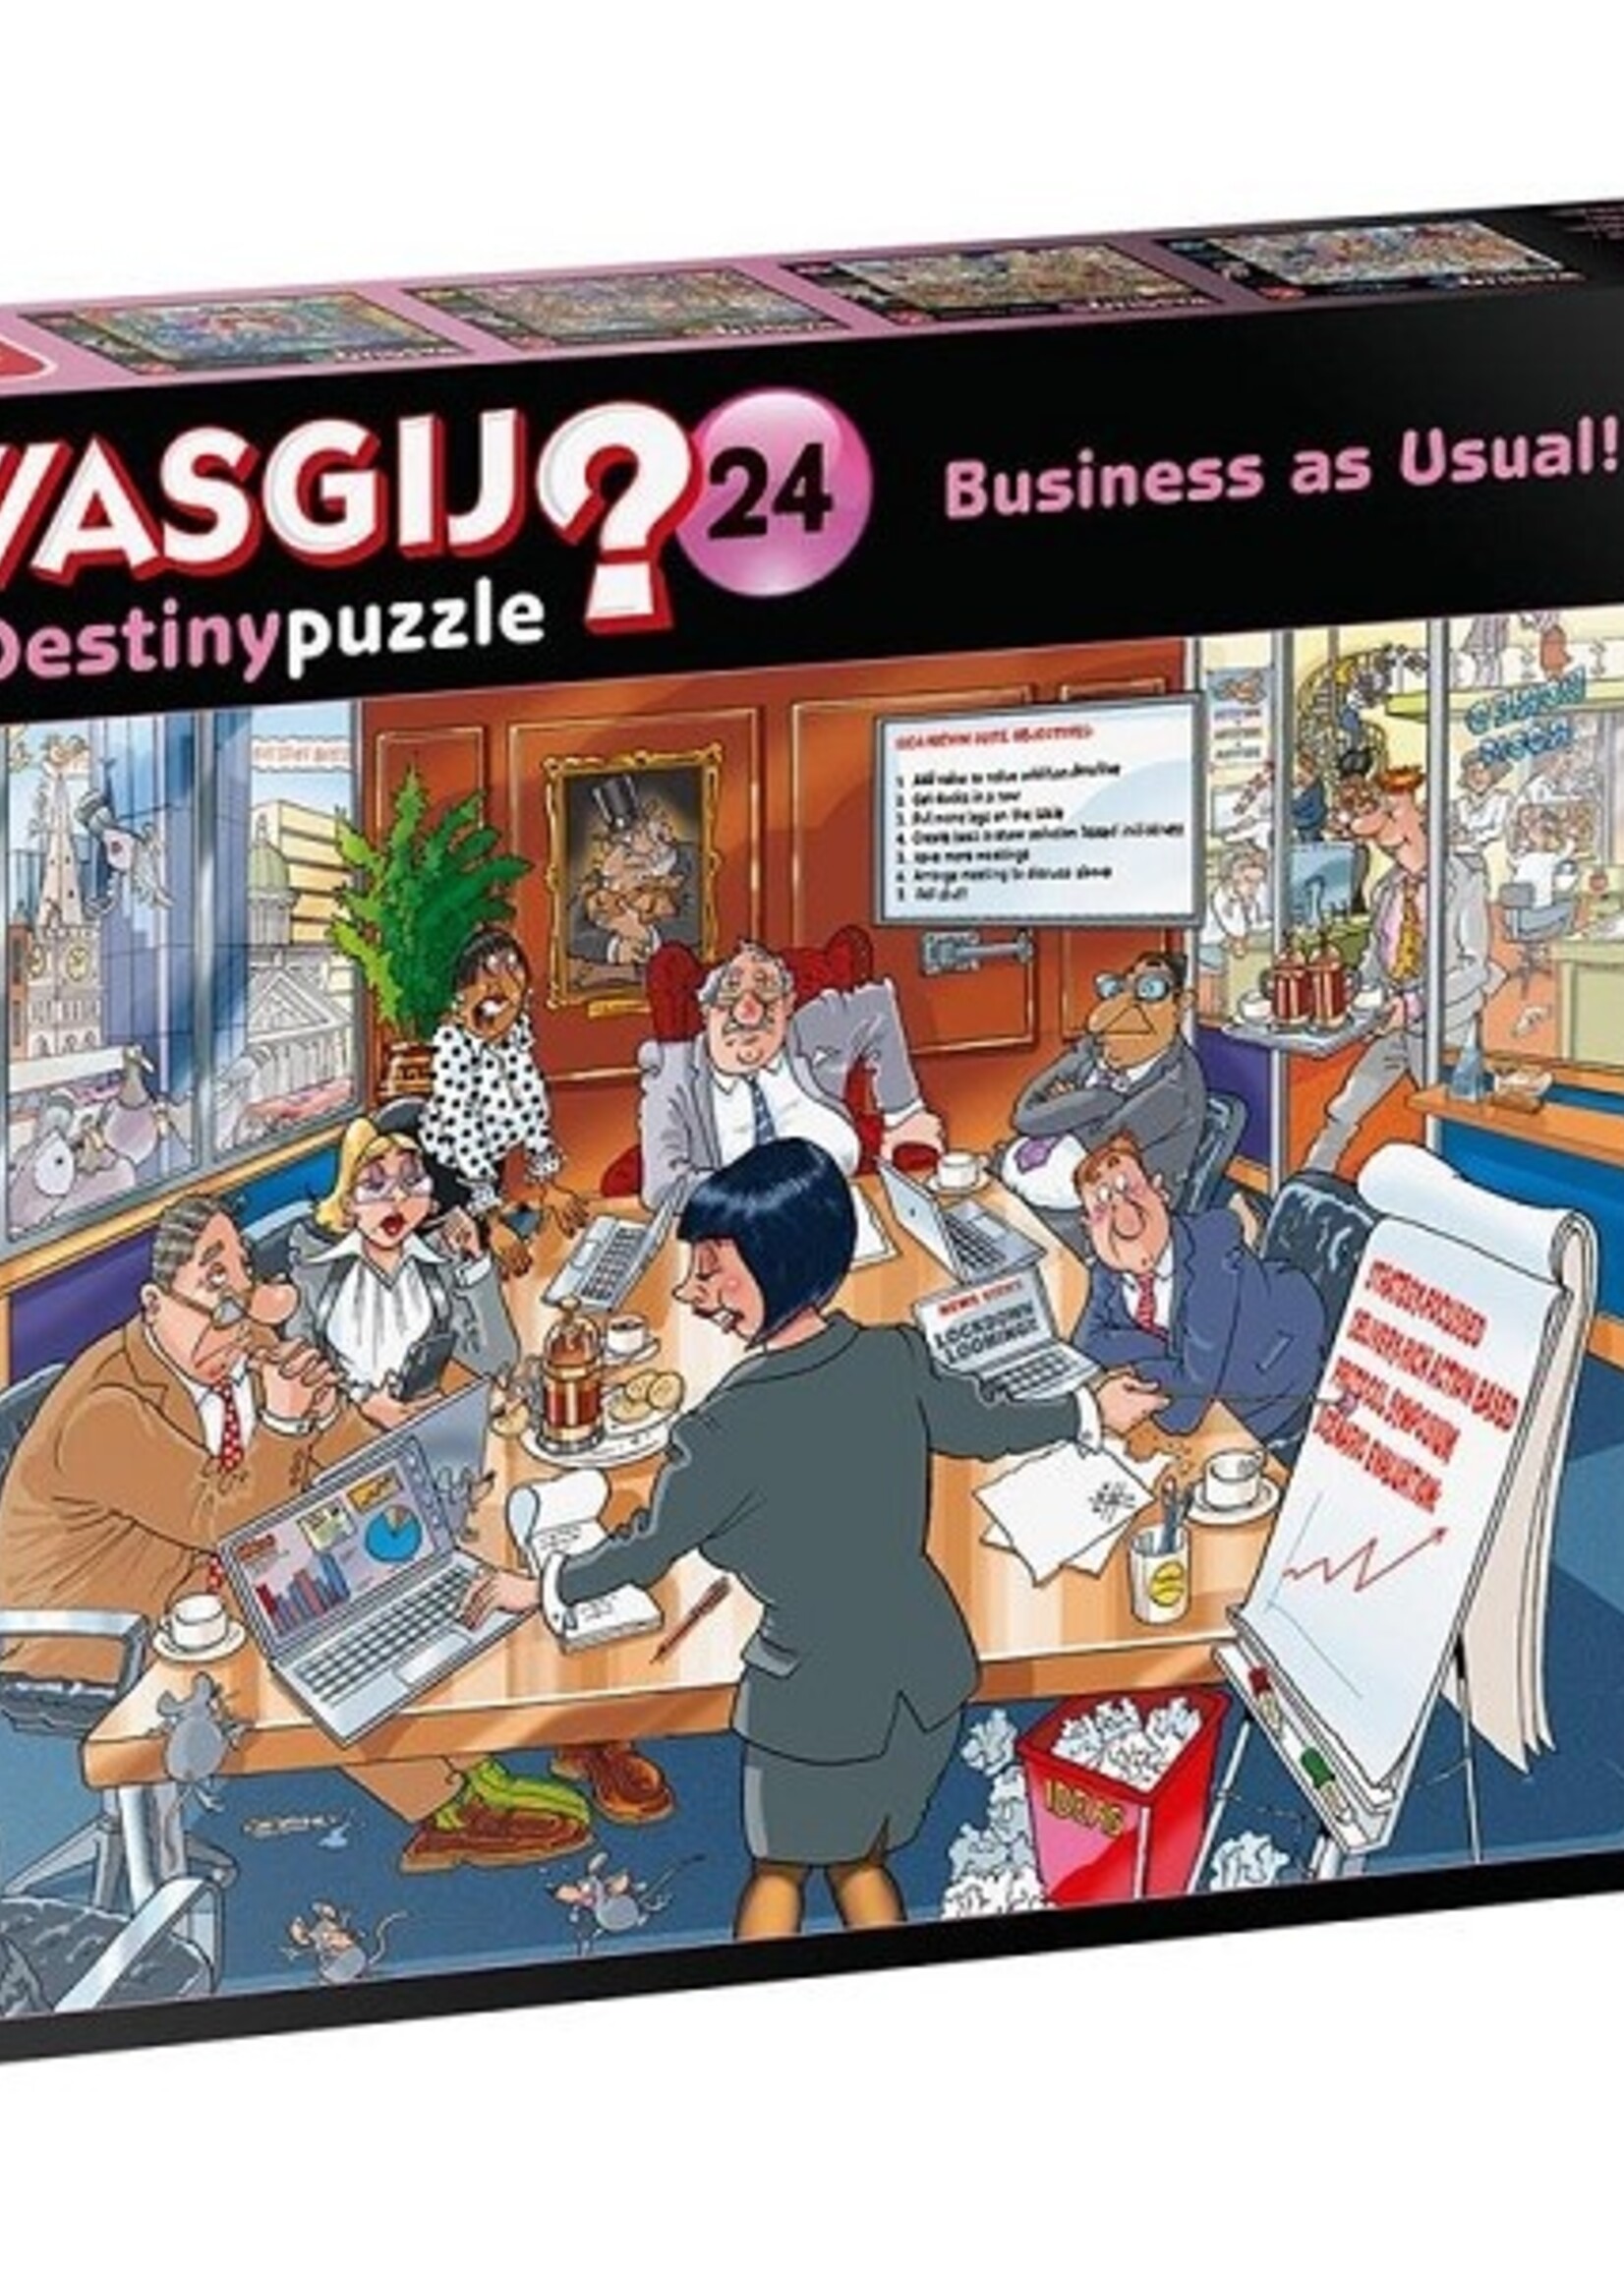 Jumbo Wasgij Destiny 24 puzzel 1000 stukjes Business as Usual!